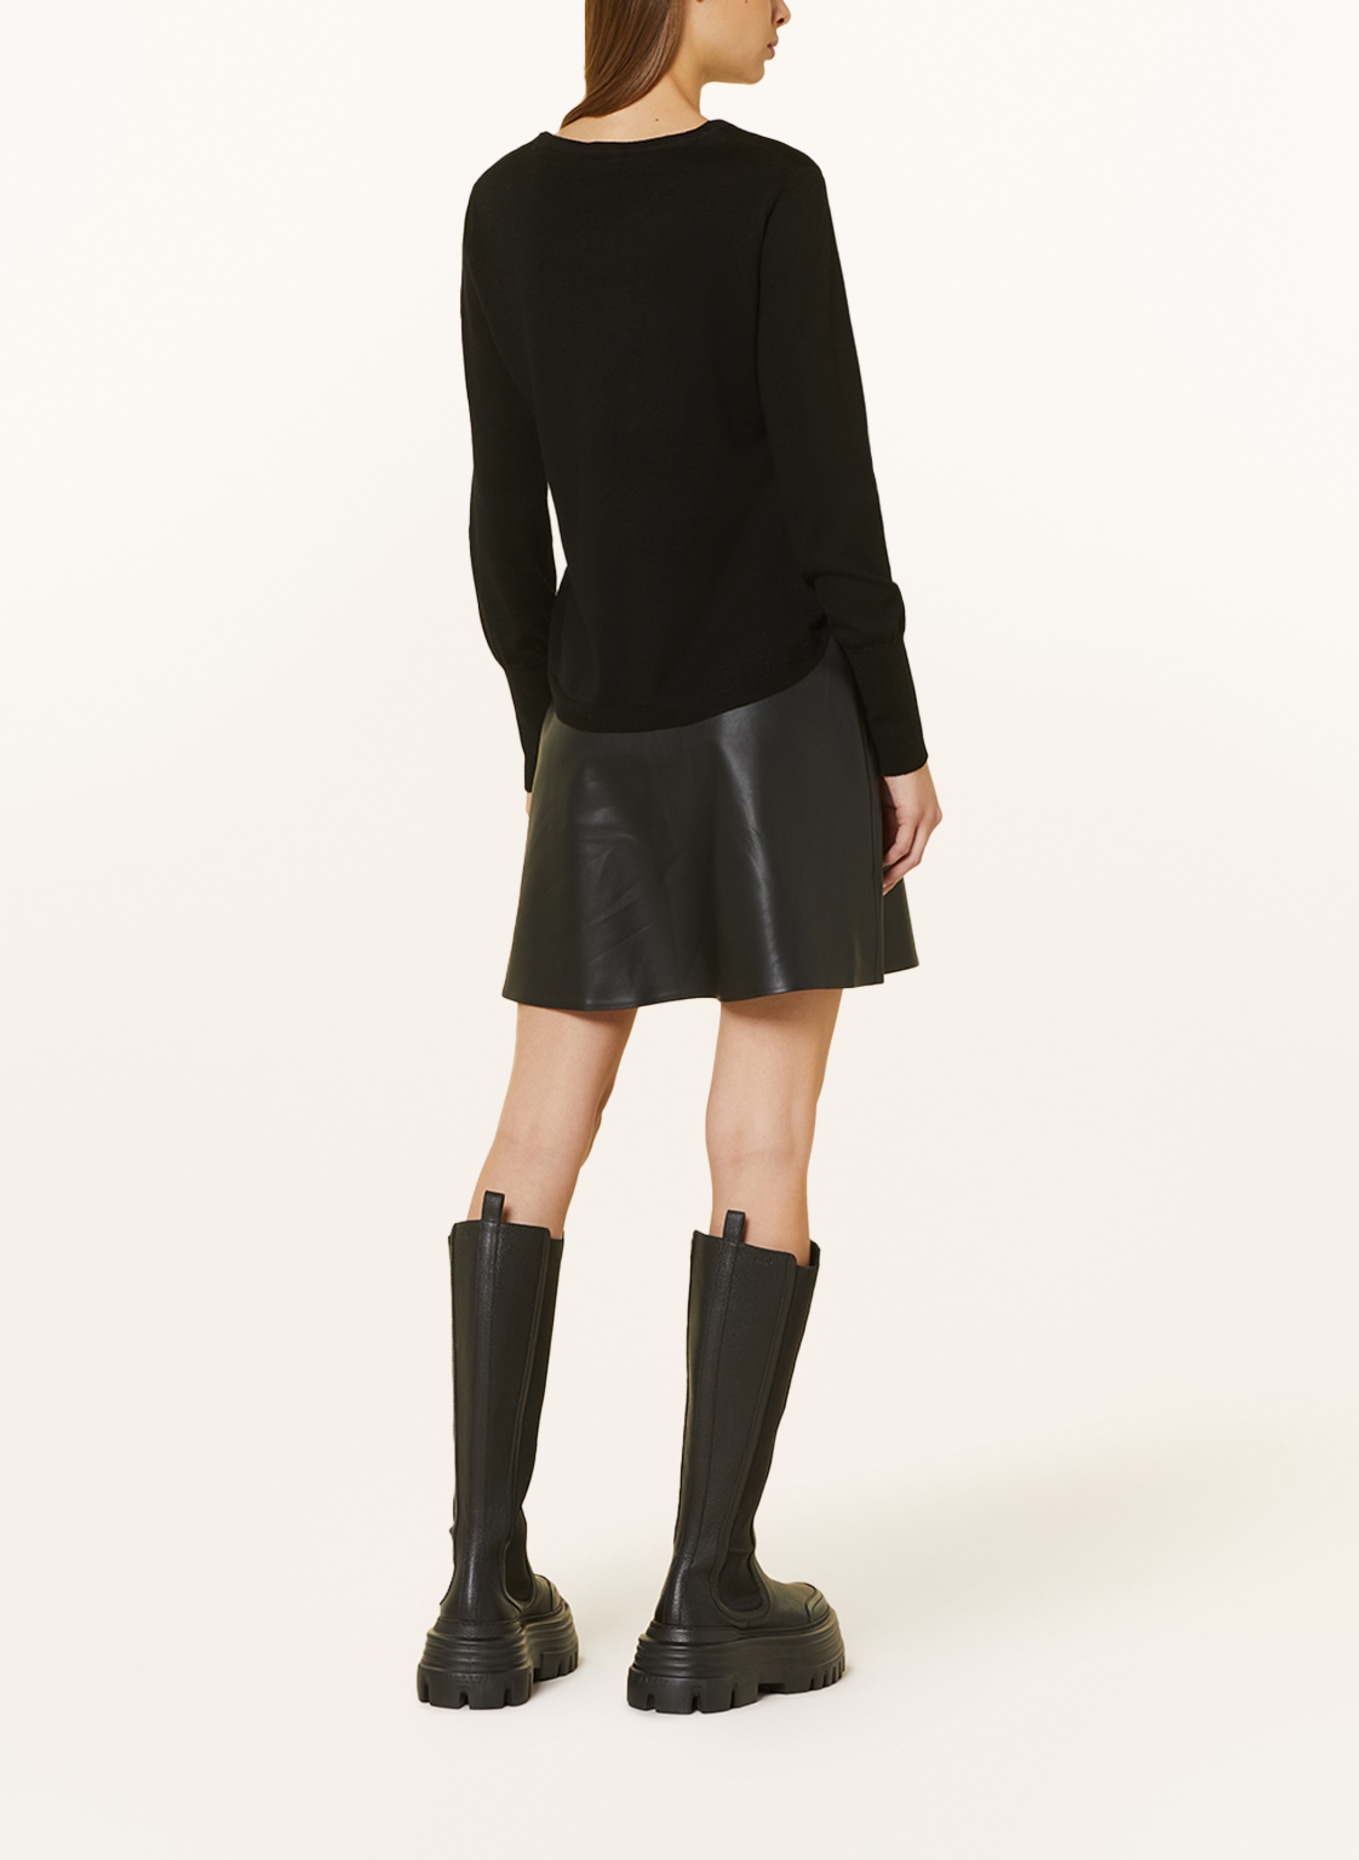 MRS & HUGS Sweater made of merino wool, Color: BLACK (Image 3)